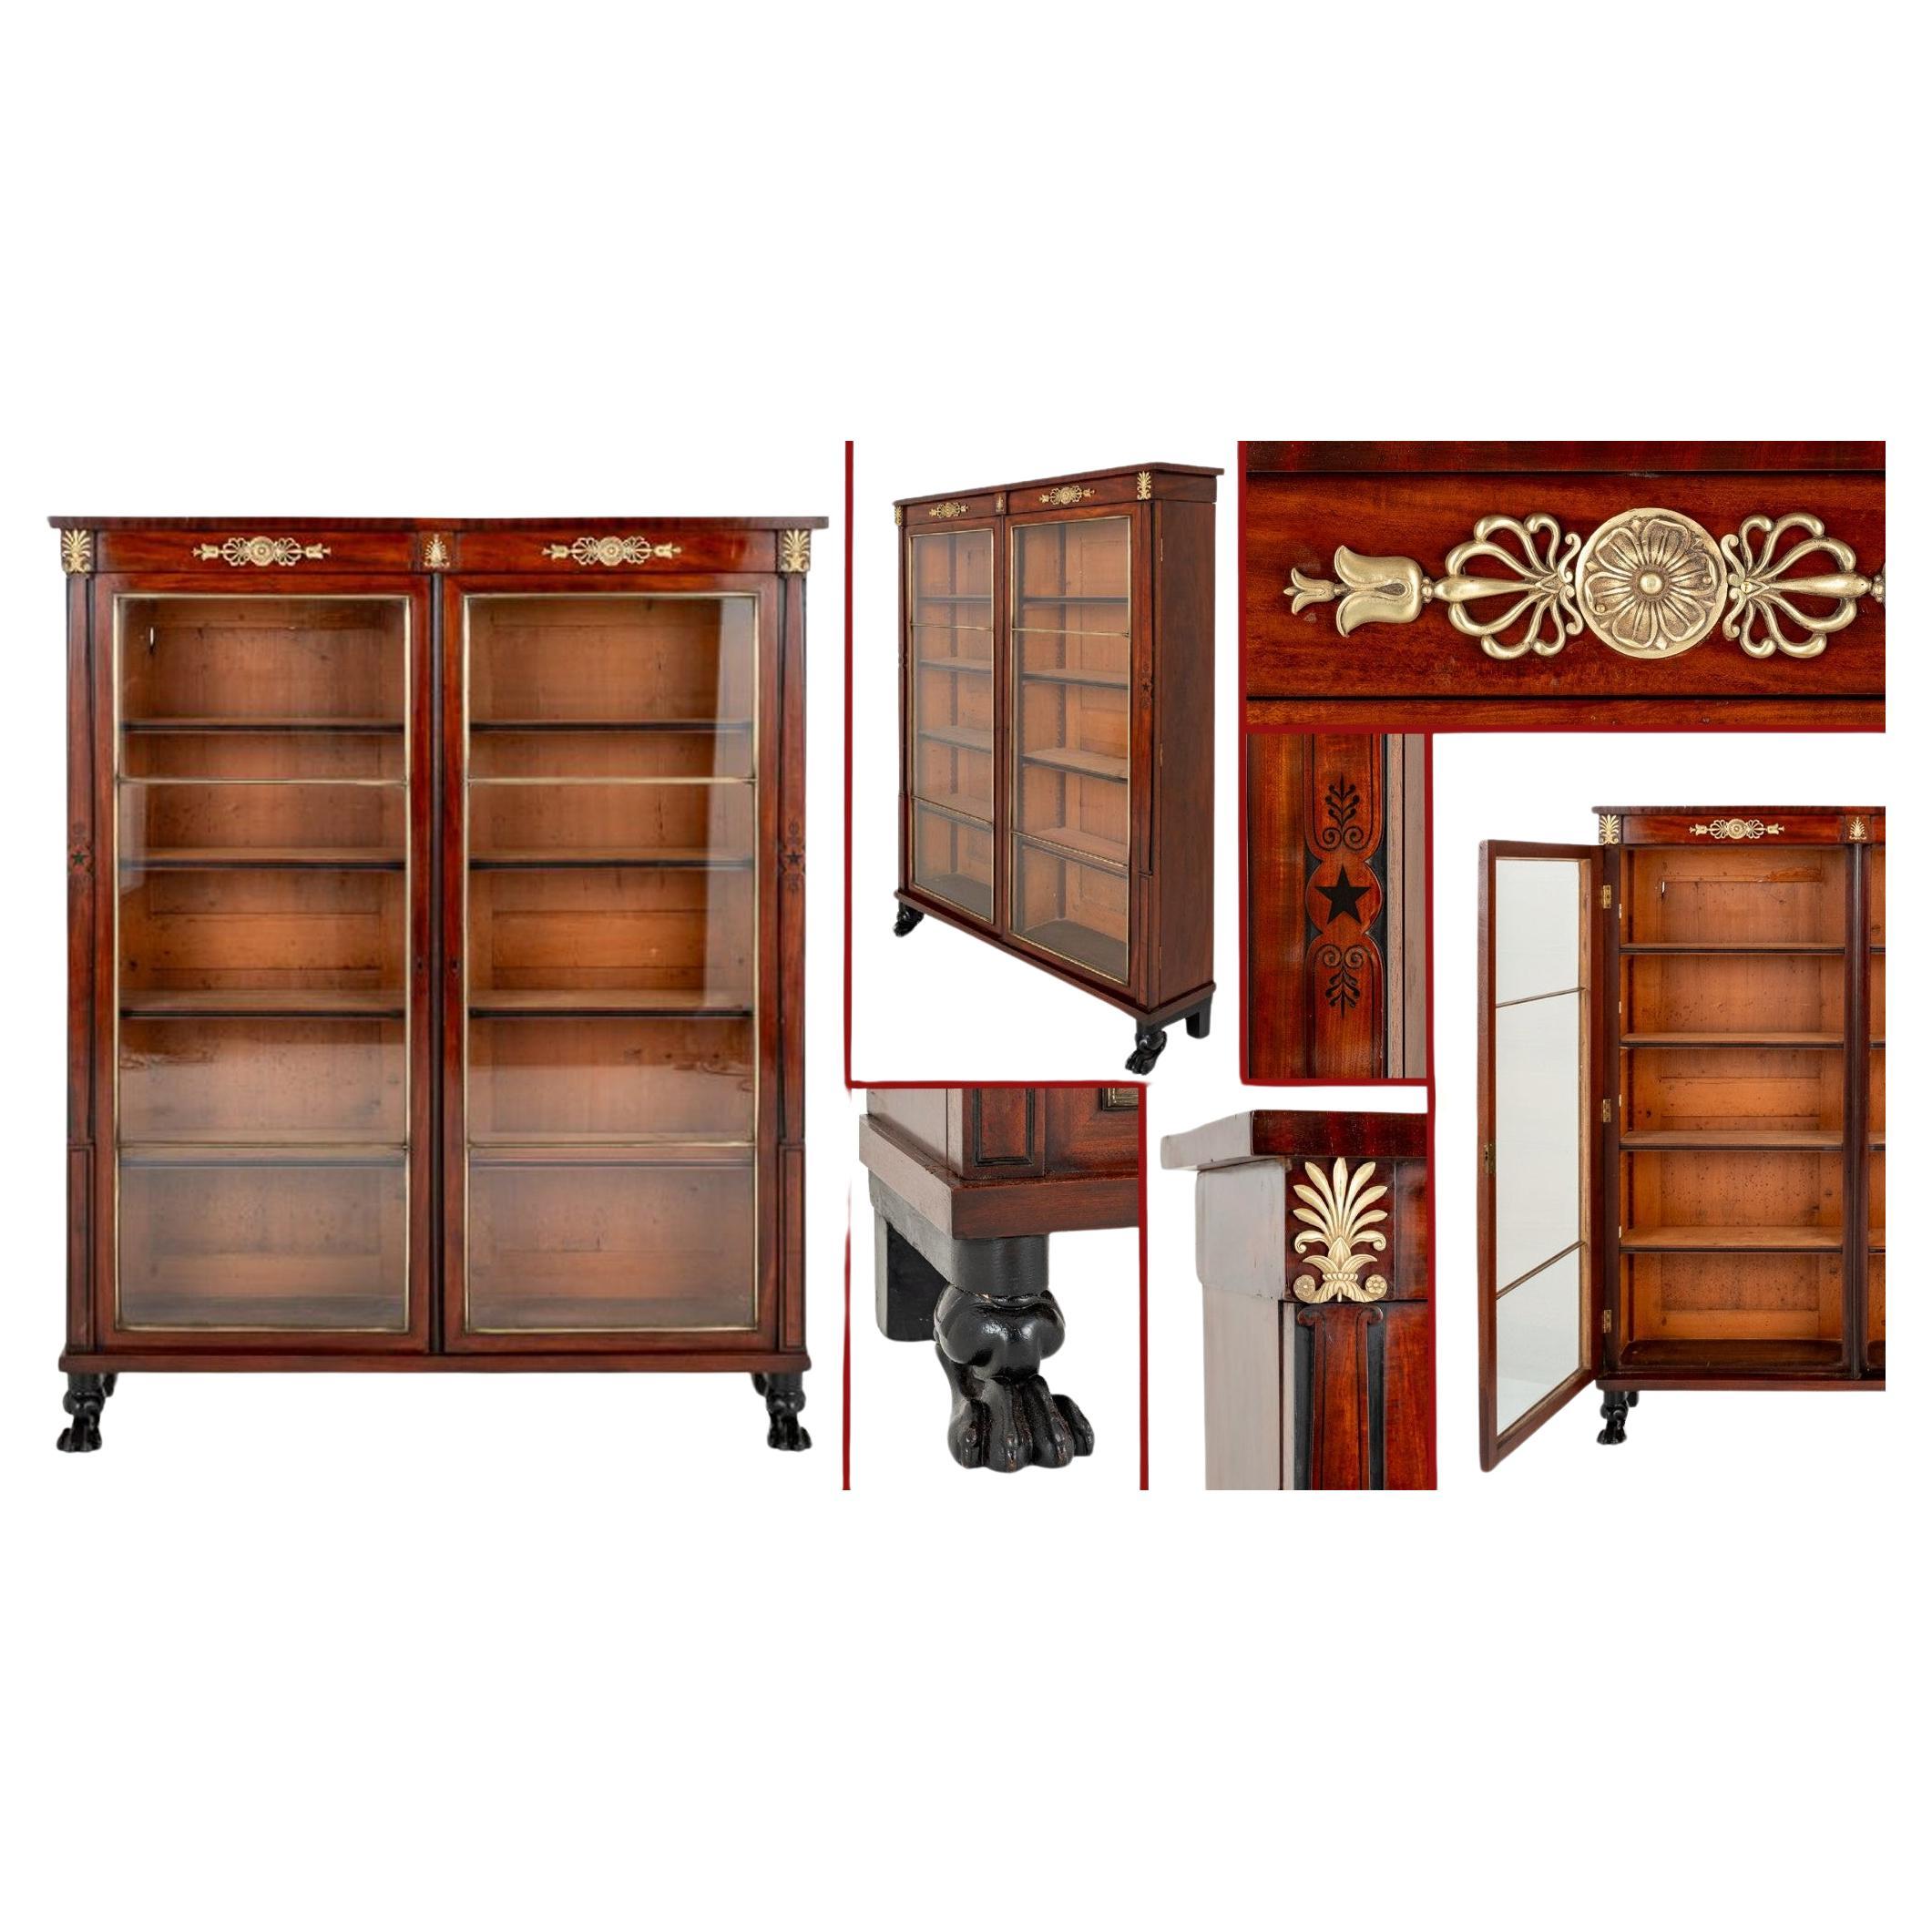 Regency Bookcase Glazed Cabinet Mahogany Period Antique